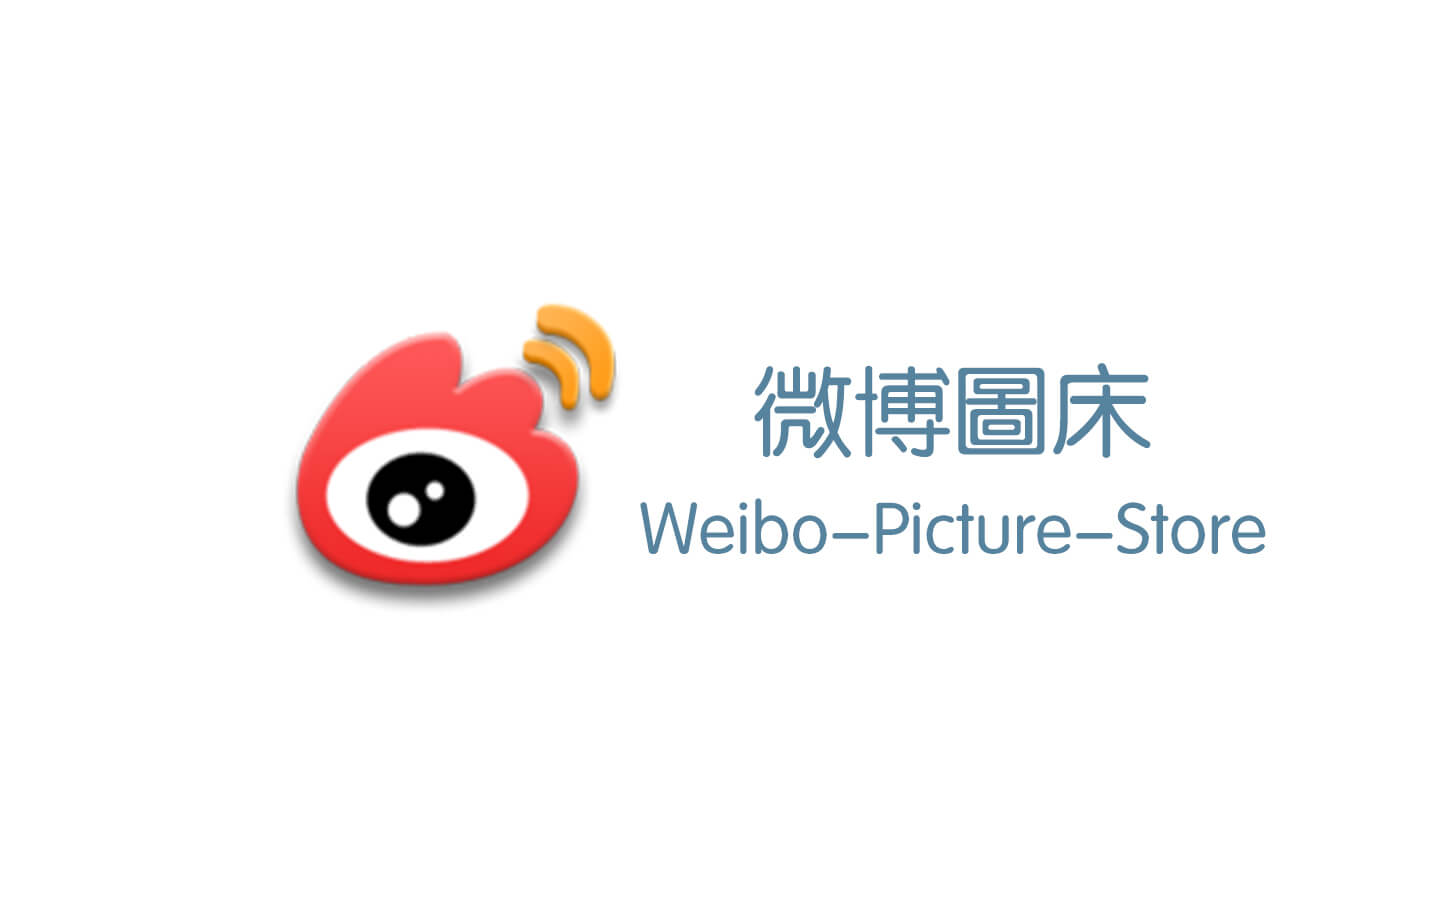 好用的新浪圖床工具推薦 - Weibo-Picture-Store